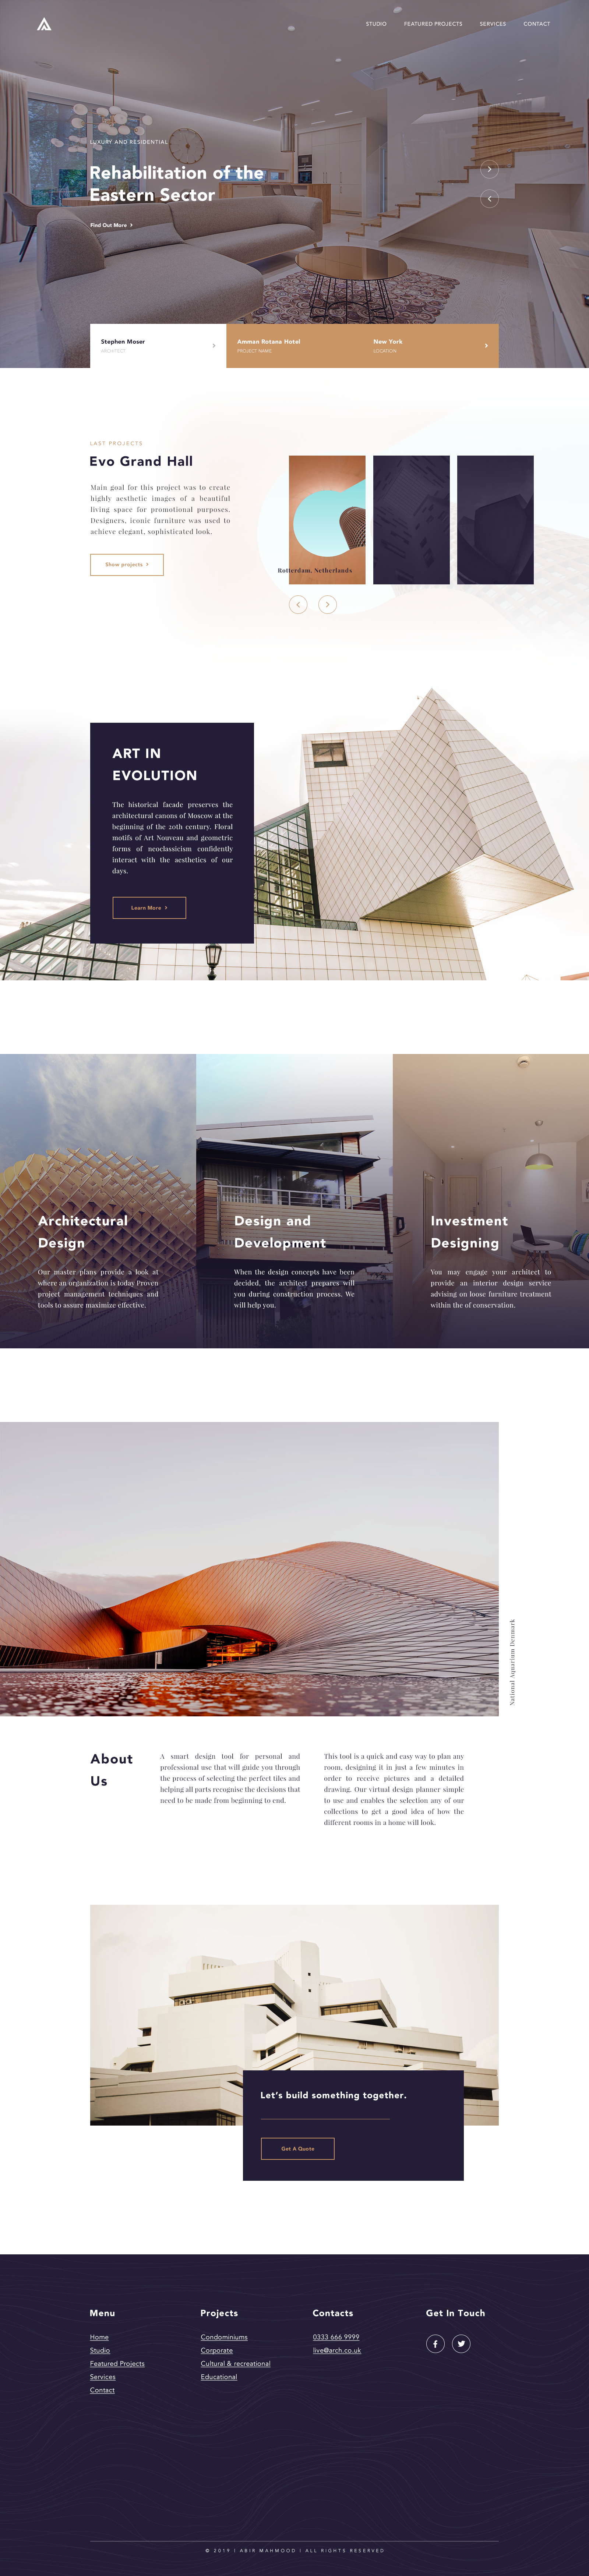 Luxury Real Estate Website Design Example #2